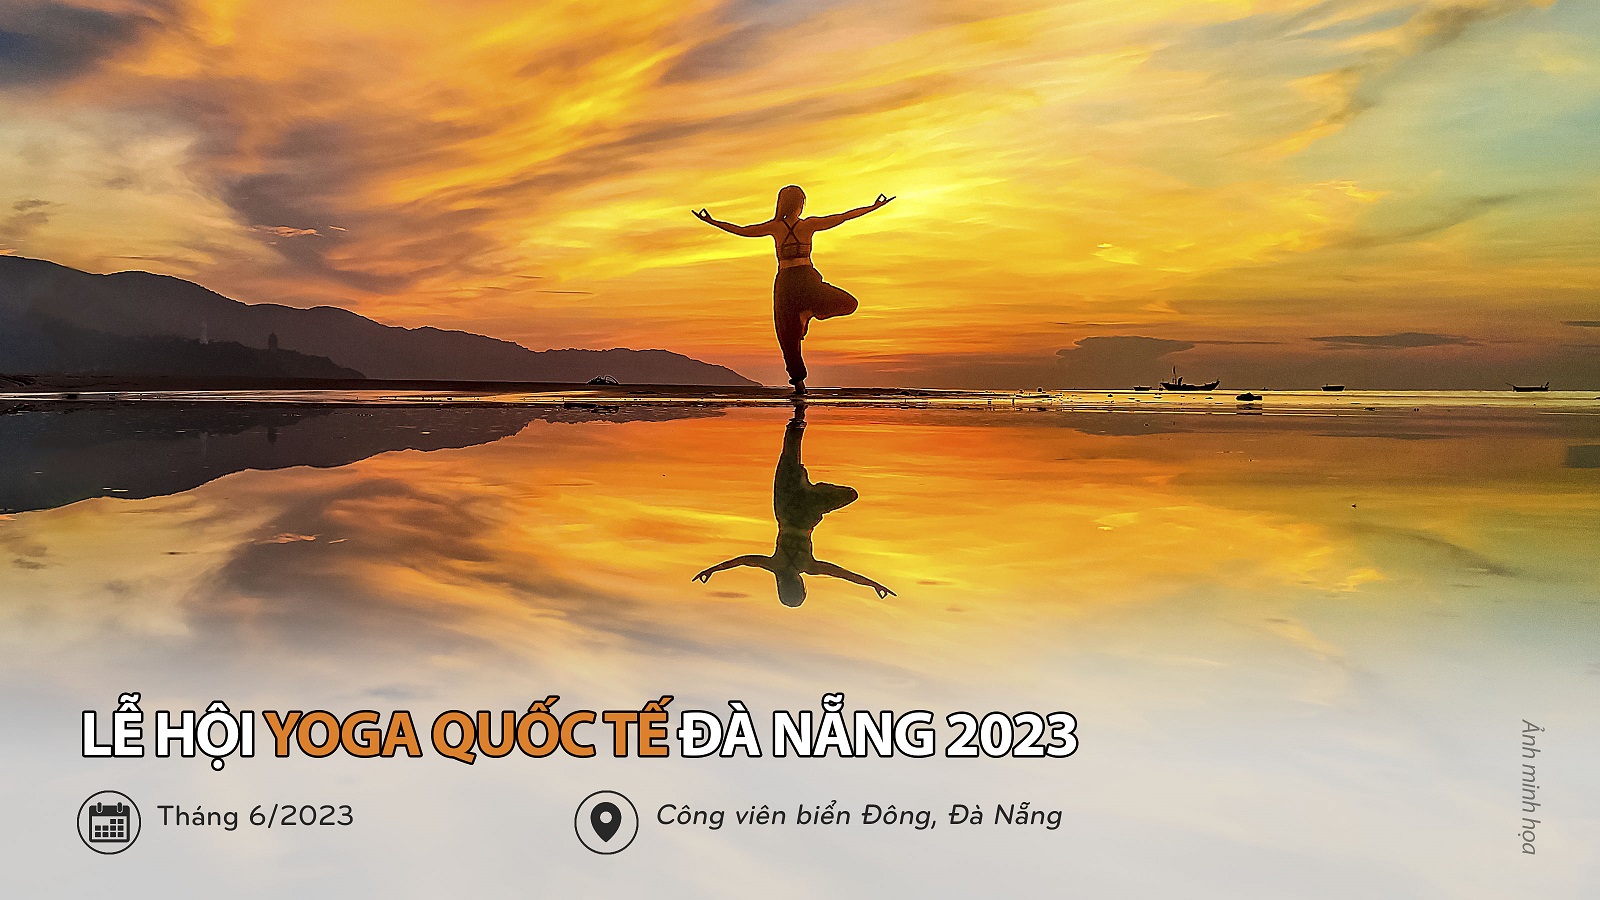 Le Hoi Yoga Quoc Te Danang 2023